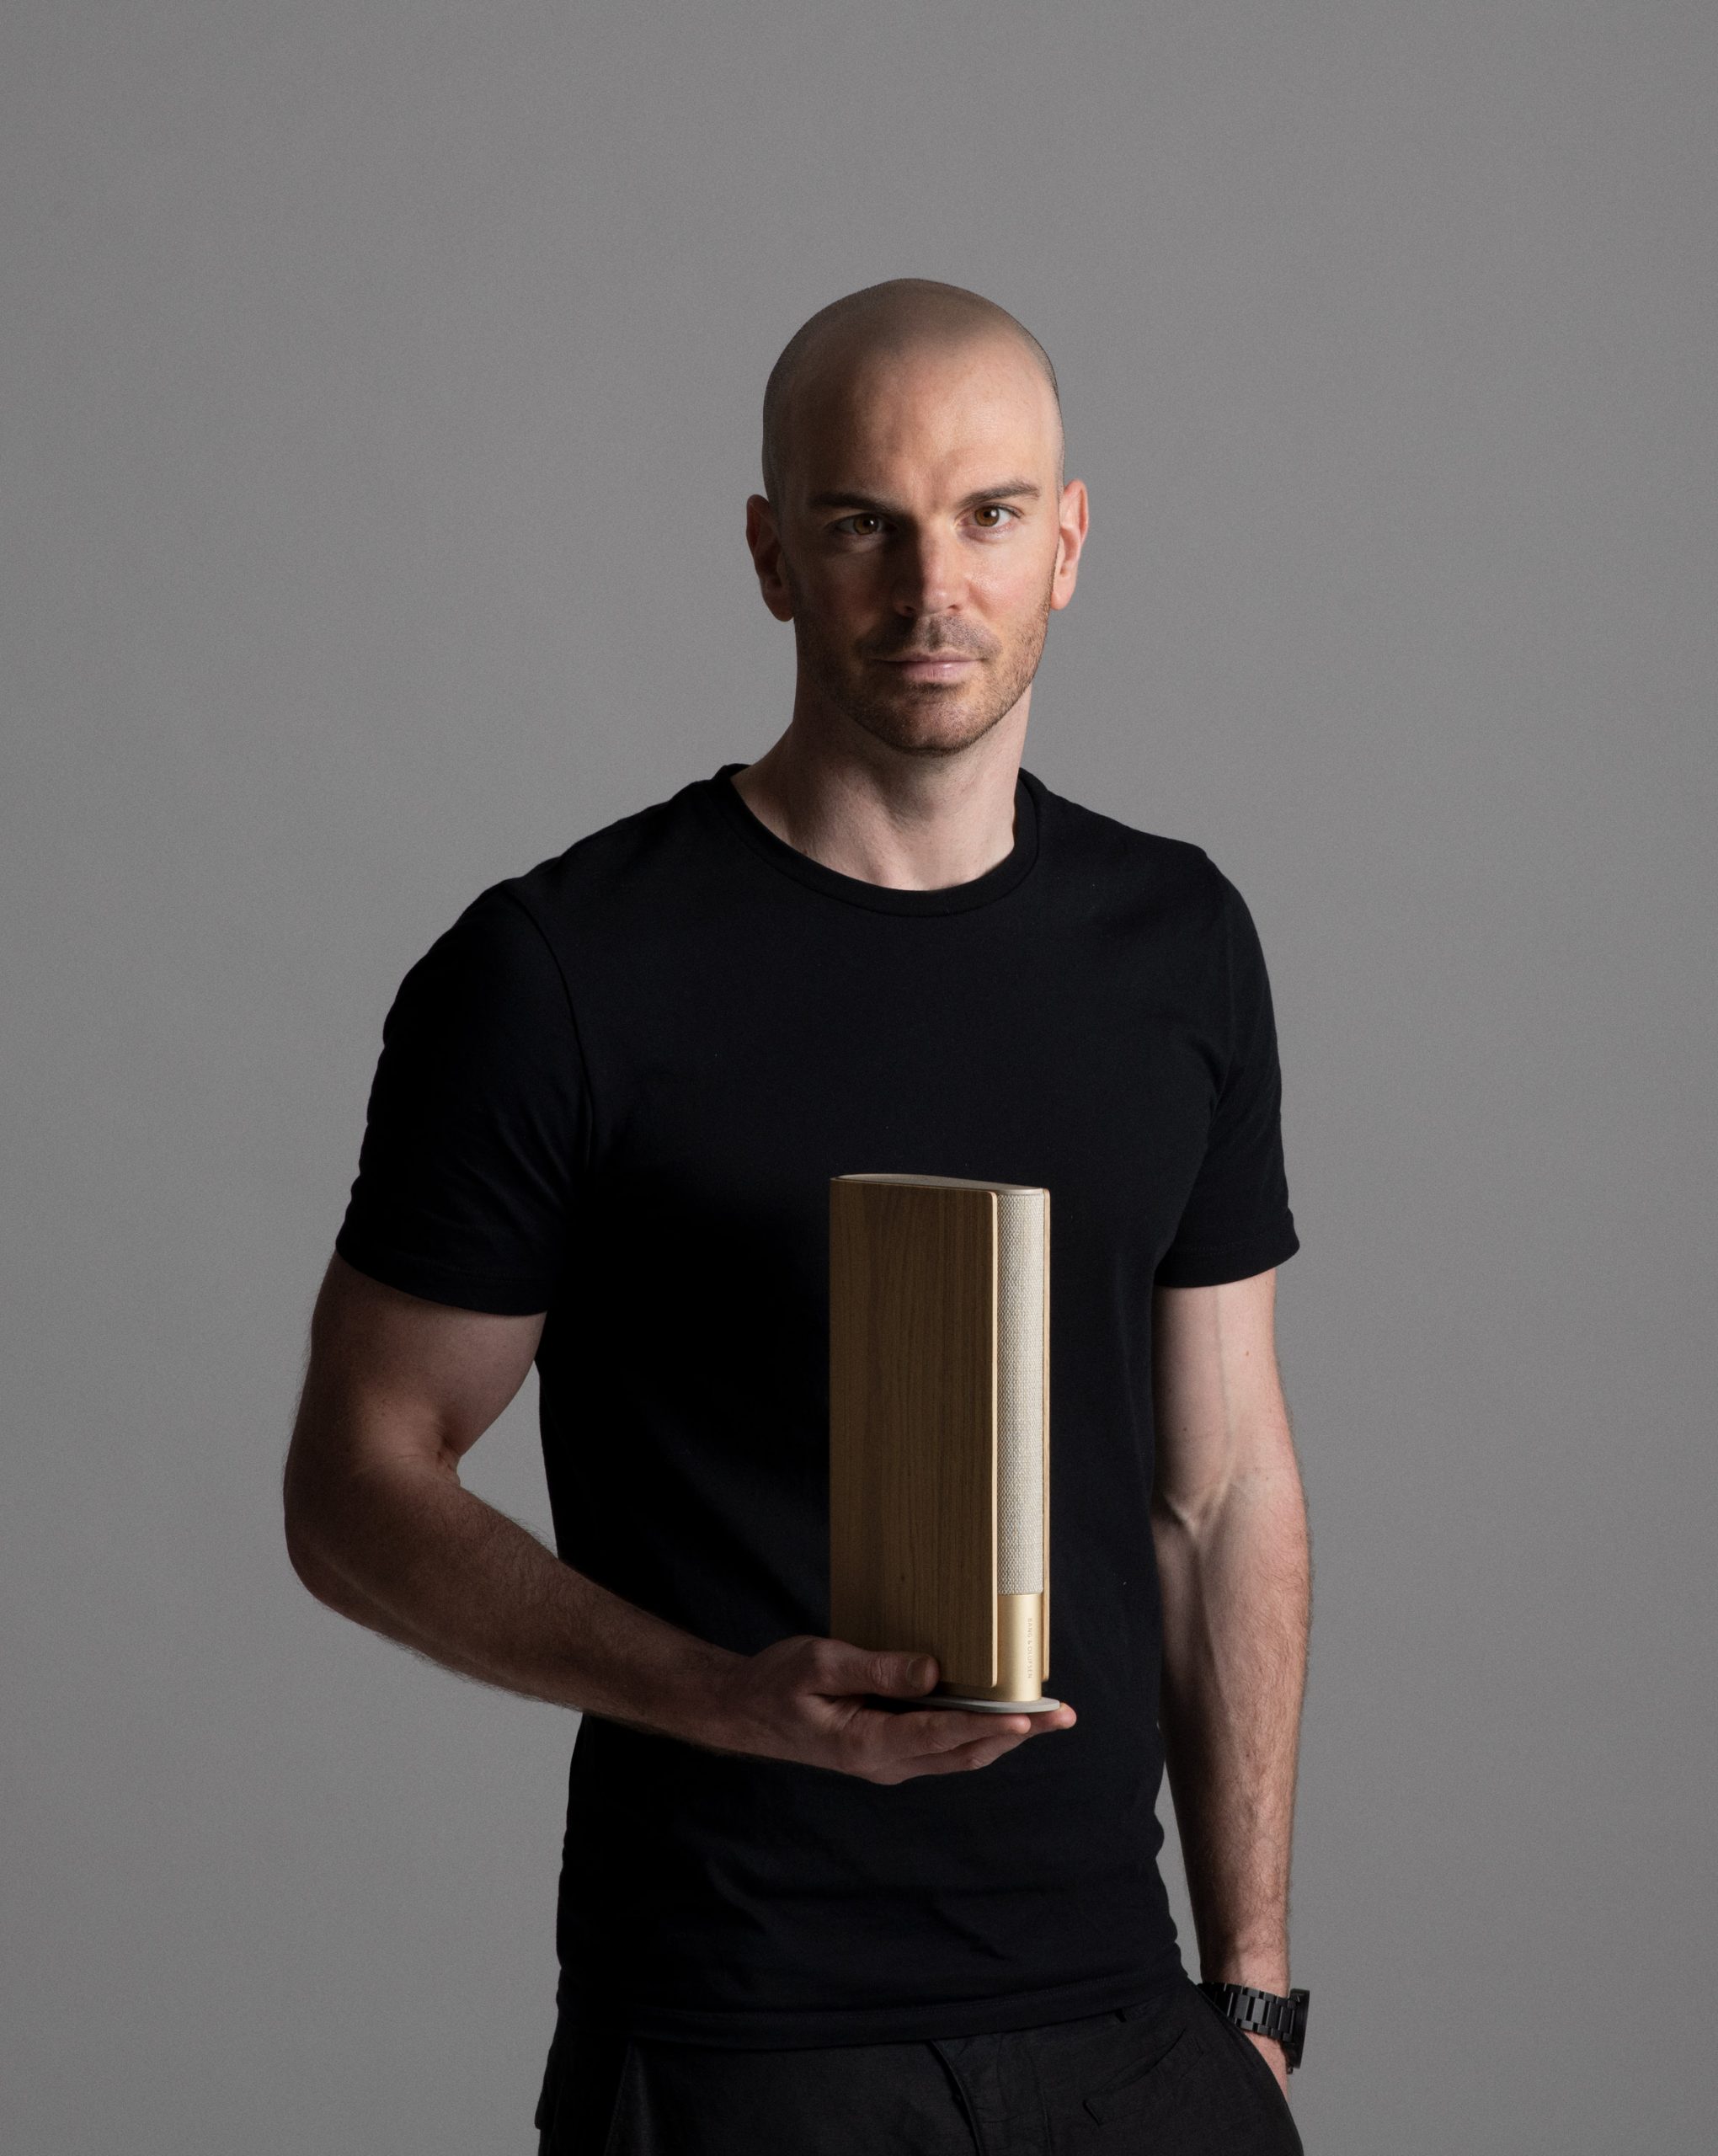 Layer creates slim Beosound Emerge bookshelf speaker for Bang